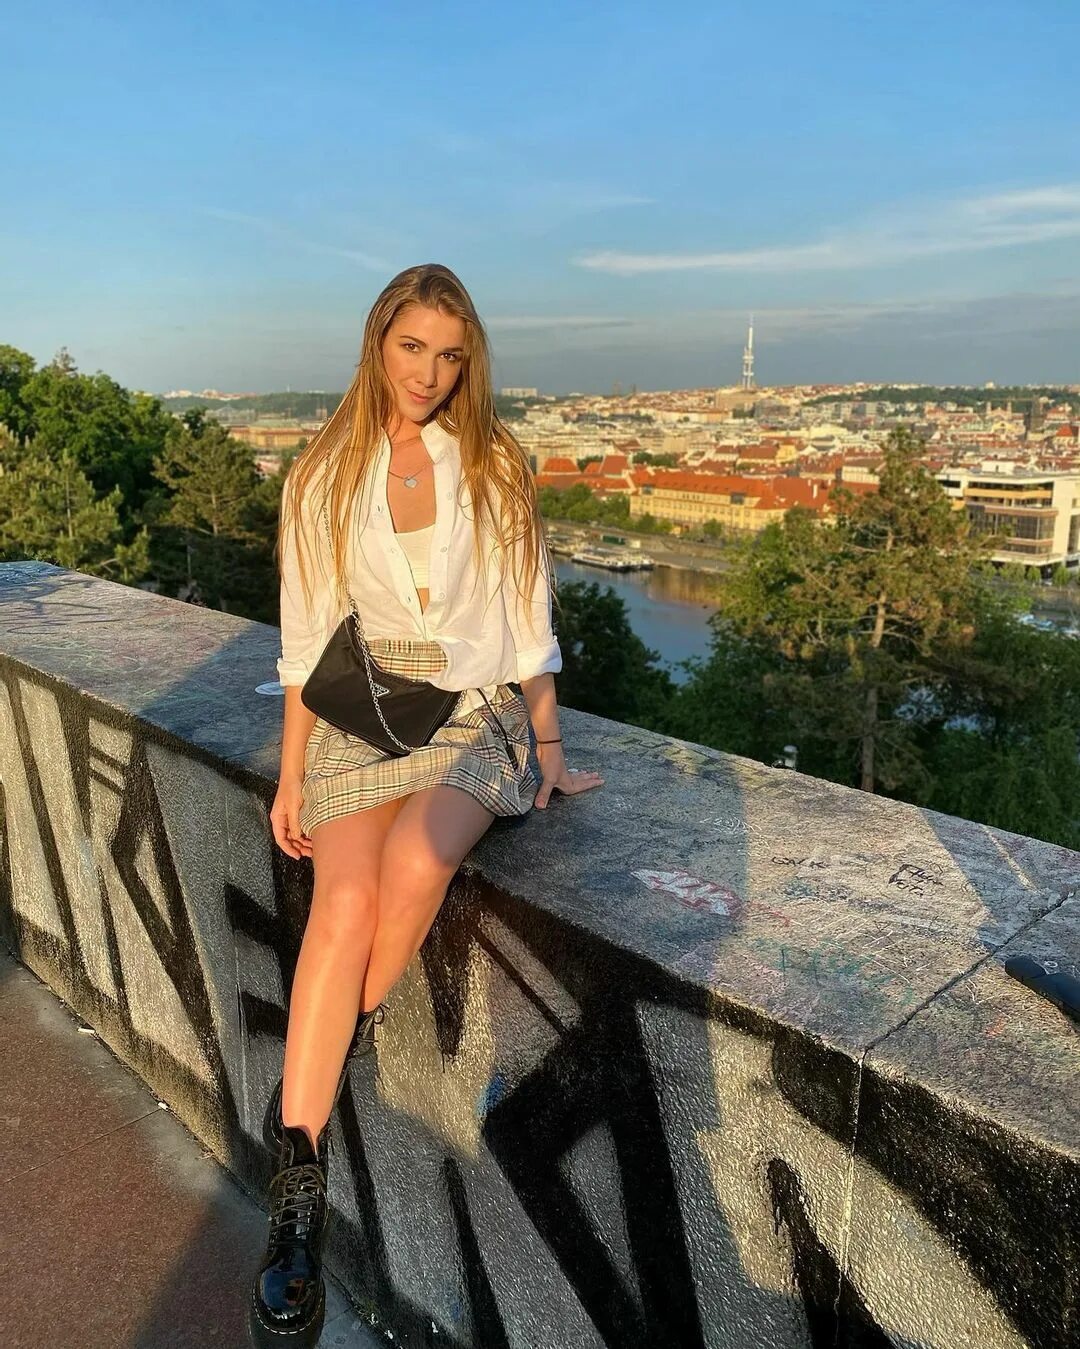 Alexis Crystal on Instagram: "Praha krásná, Praha má! 🇨 🇿 ☀ ️❤"...